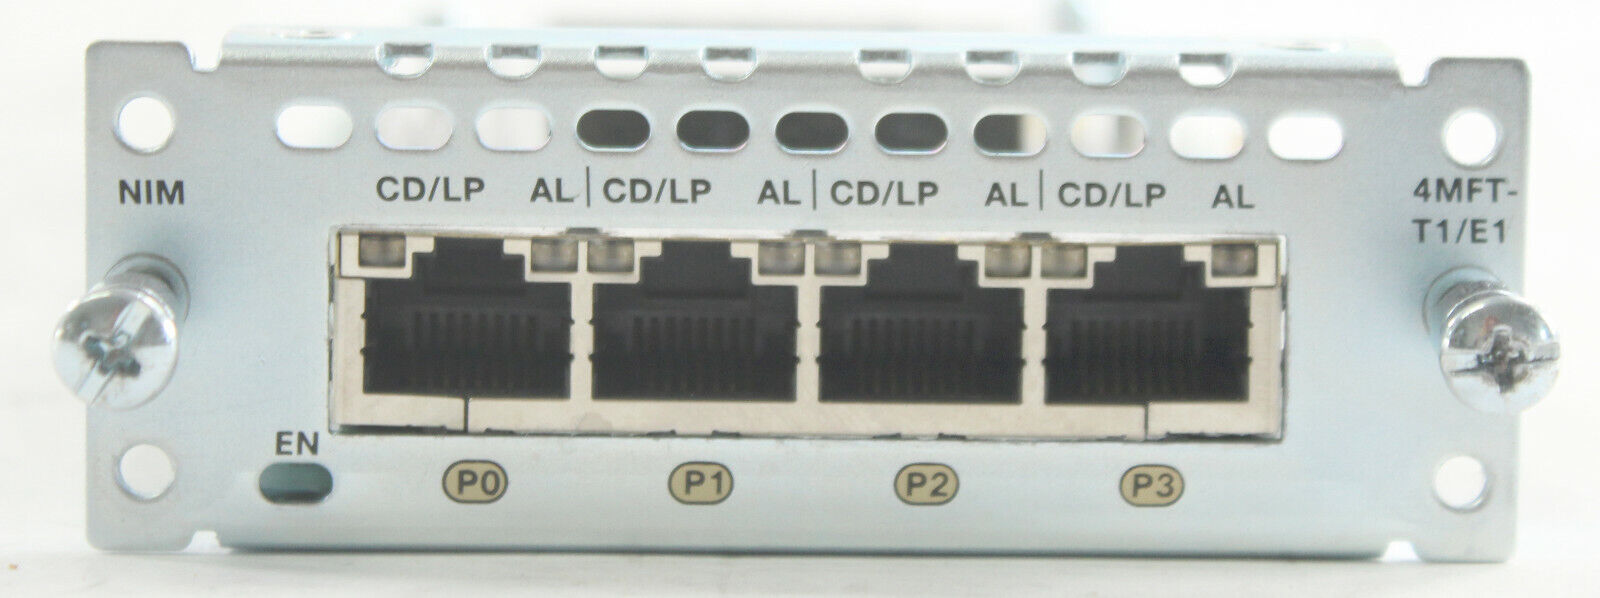 Cisco NIM-4MFT-T1/E1 4 port Multiflex Trunk Voice/Clear-channel Data T1/E1 Mod